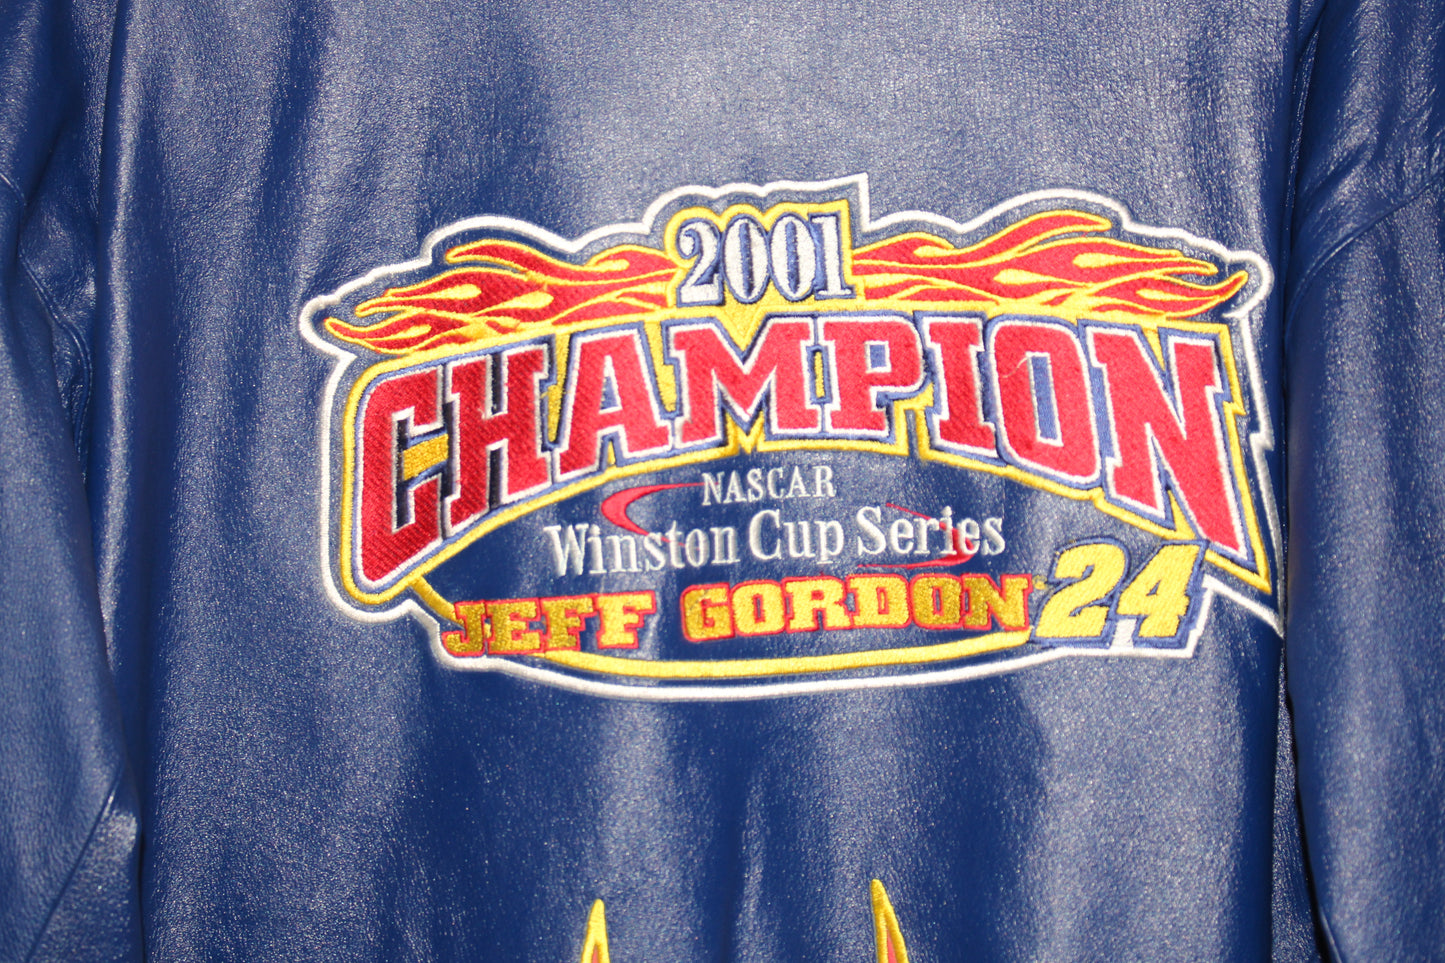 Jeff Hamilton Jacket NASCAR Jeff Gordon #24 Winston Cup Series 2001 Champion (L)